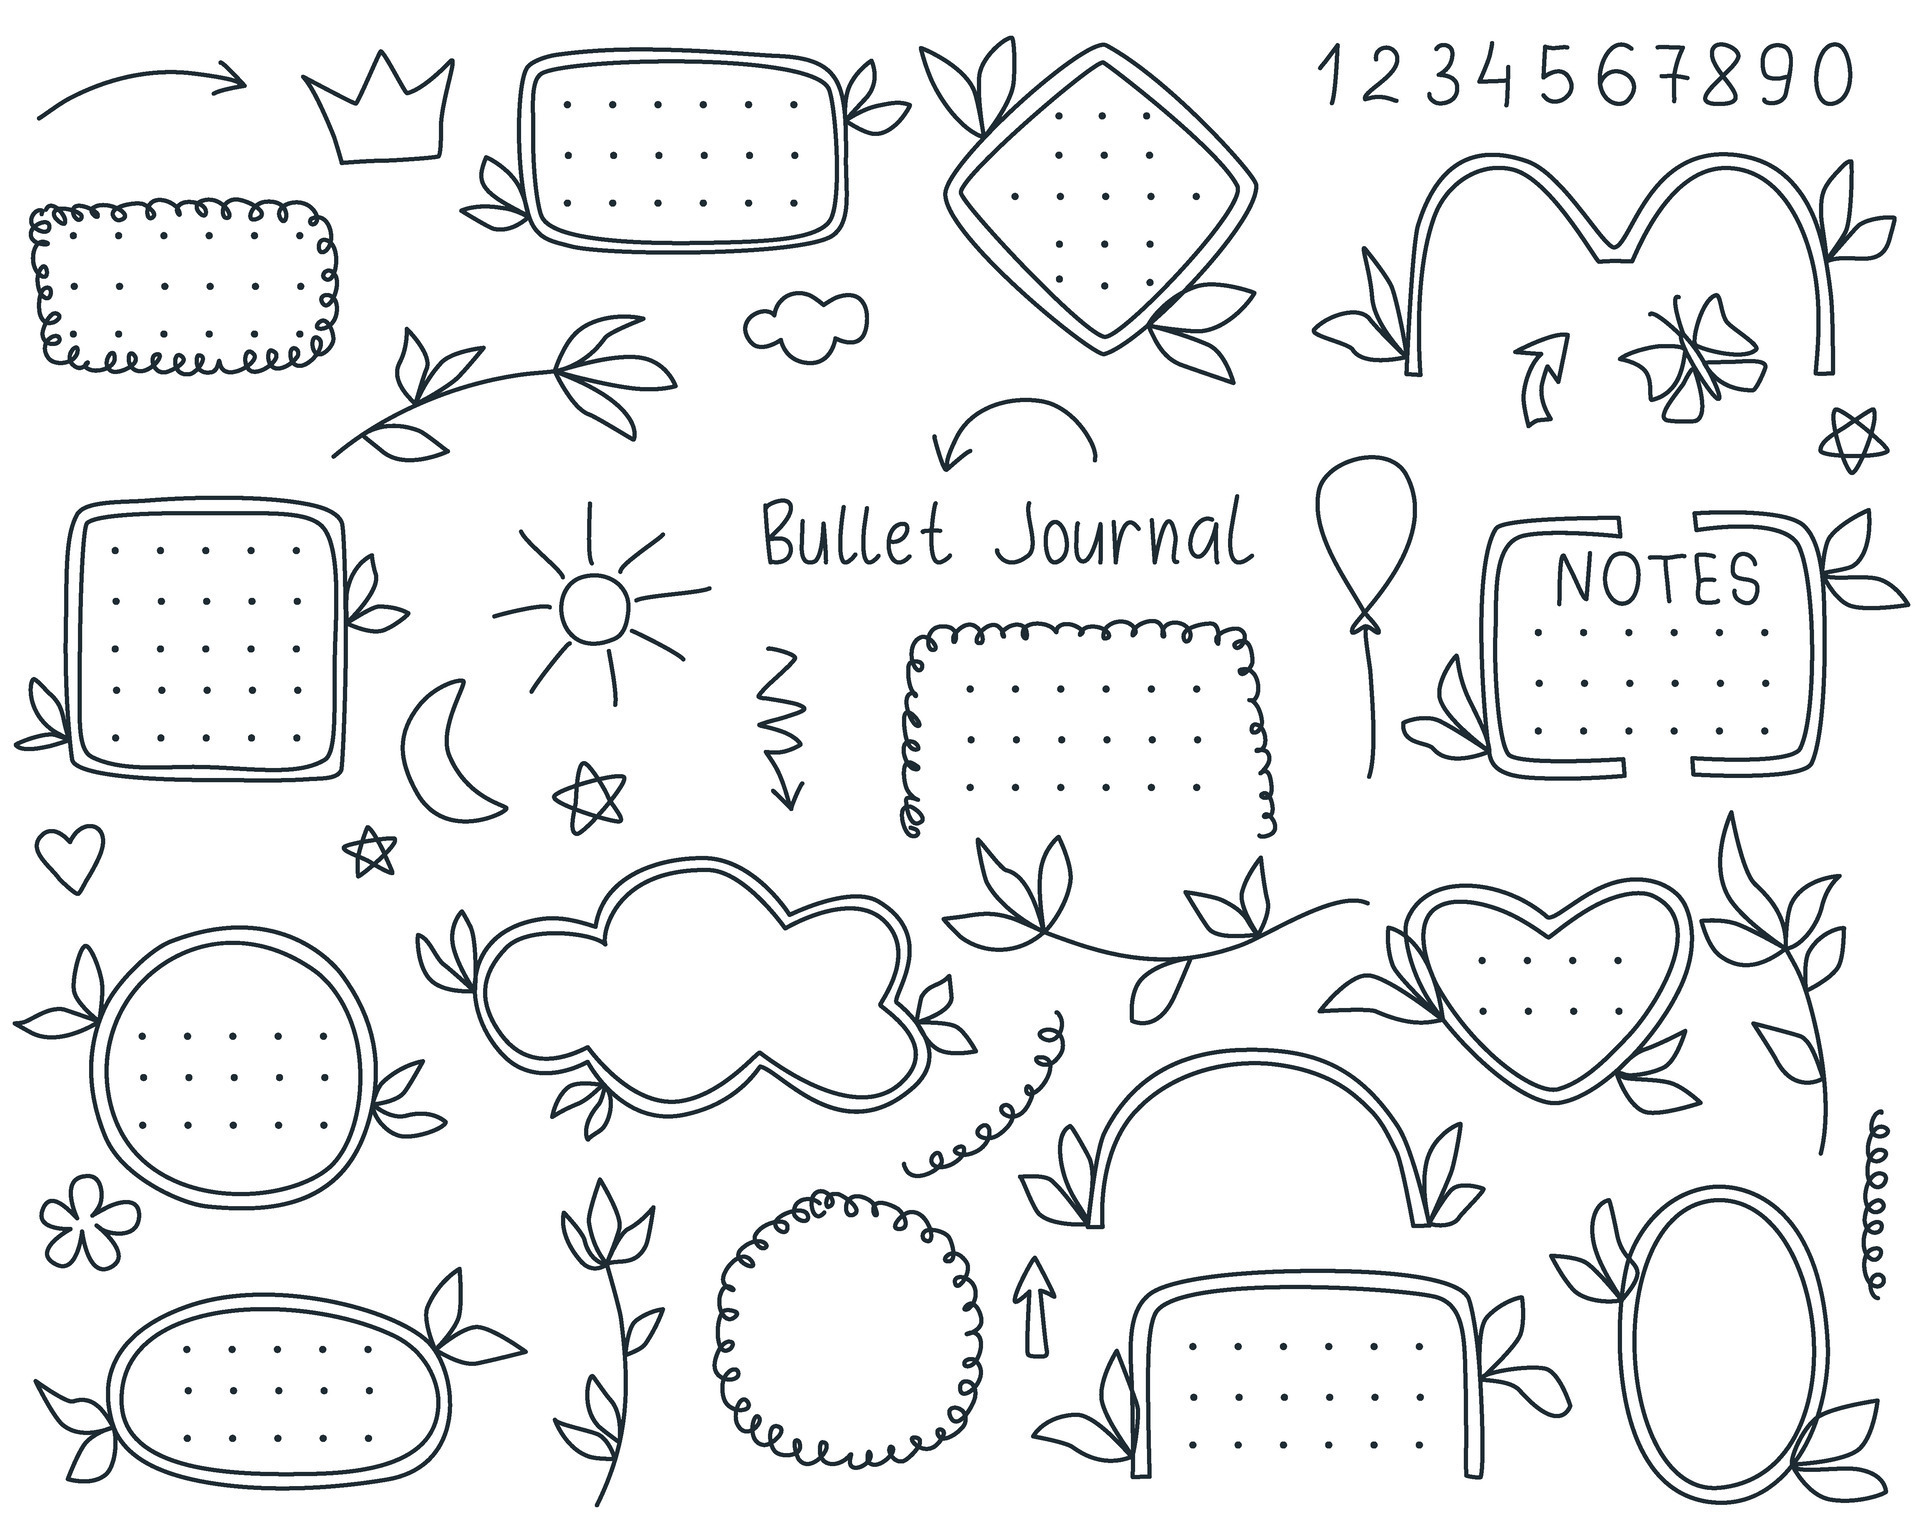 Bullet journal doodle sketch style set 35012125 Vector Art at Vecteezy